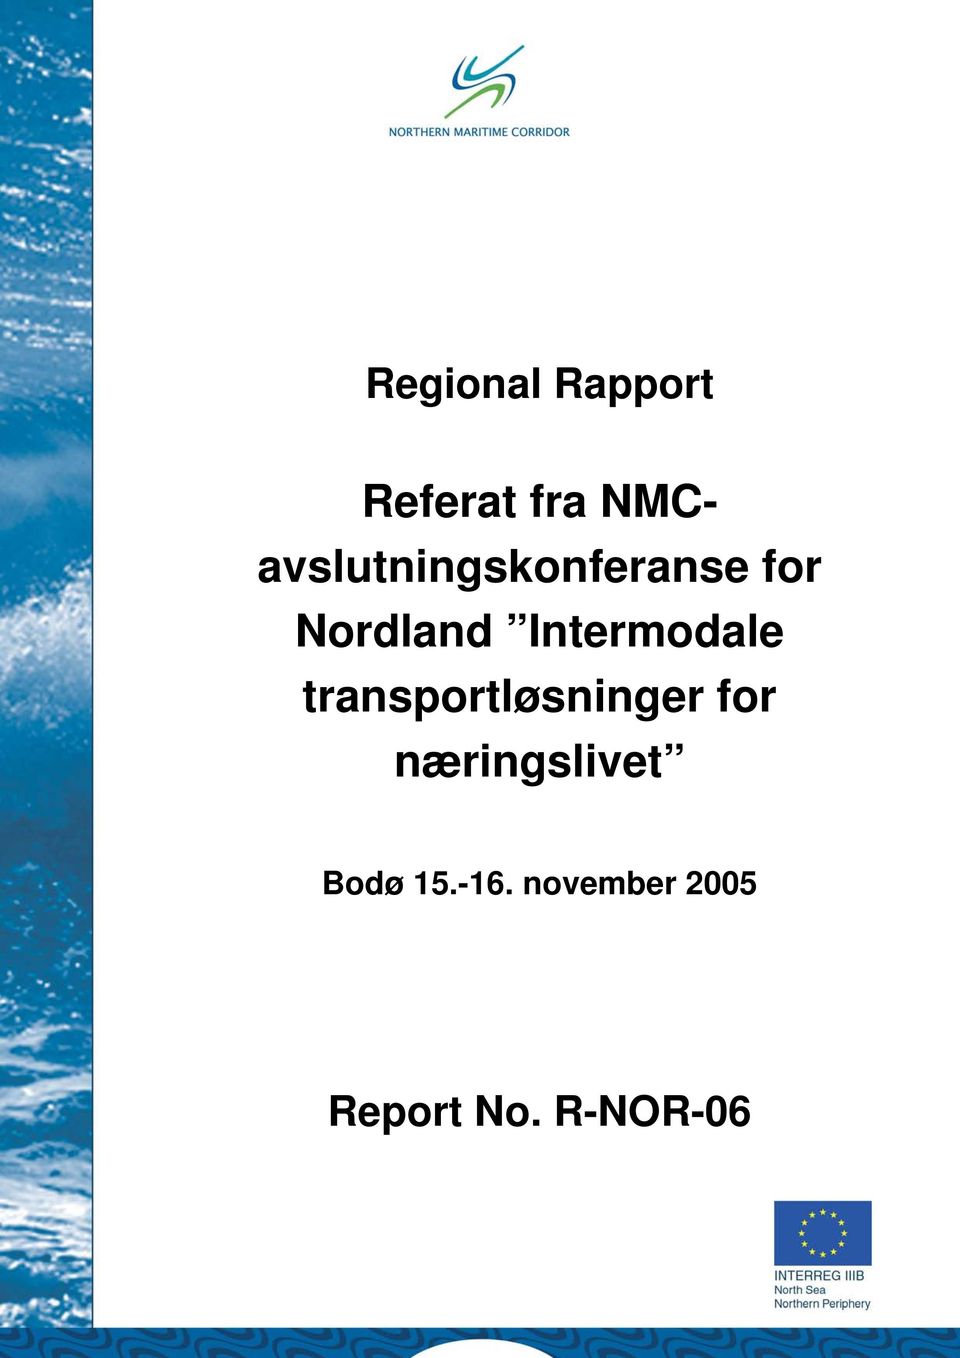 NMCavslutningskonferanse for Nordland Intermodale transportløsninger